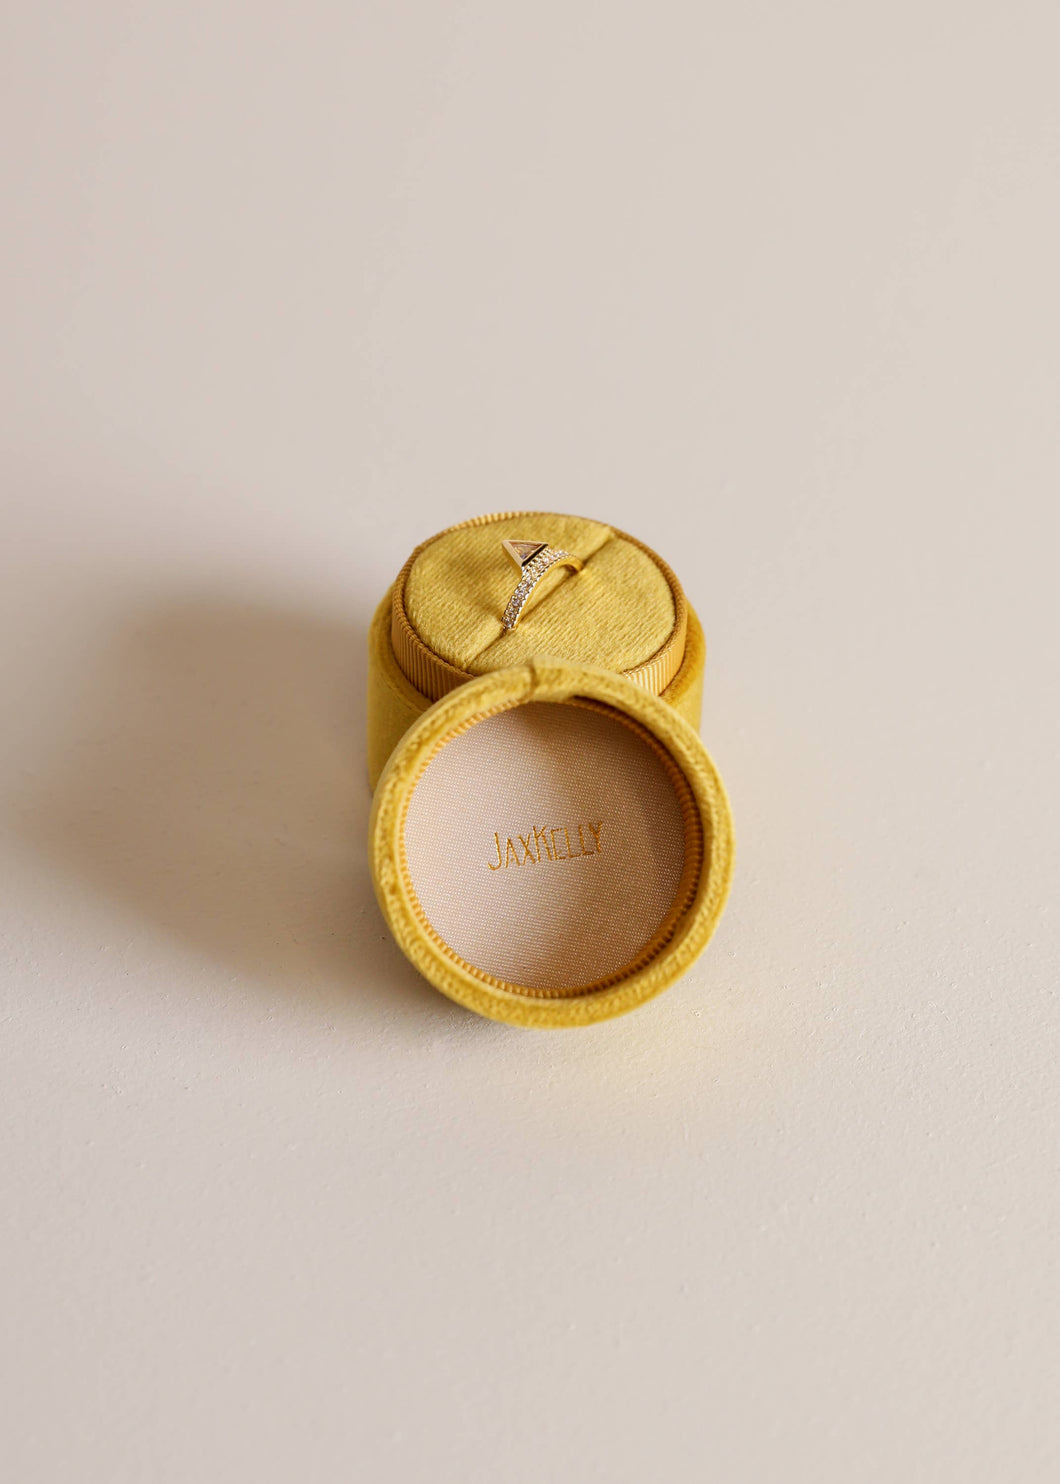 JaxKelly - Circle Velvet Jewelry Box